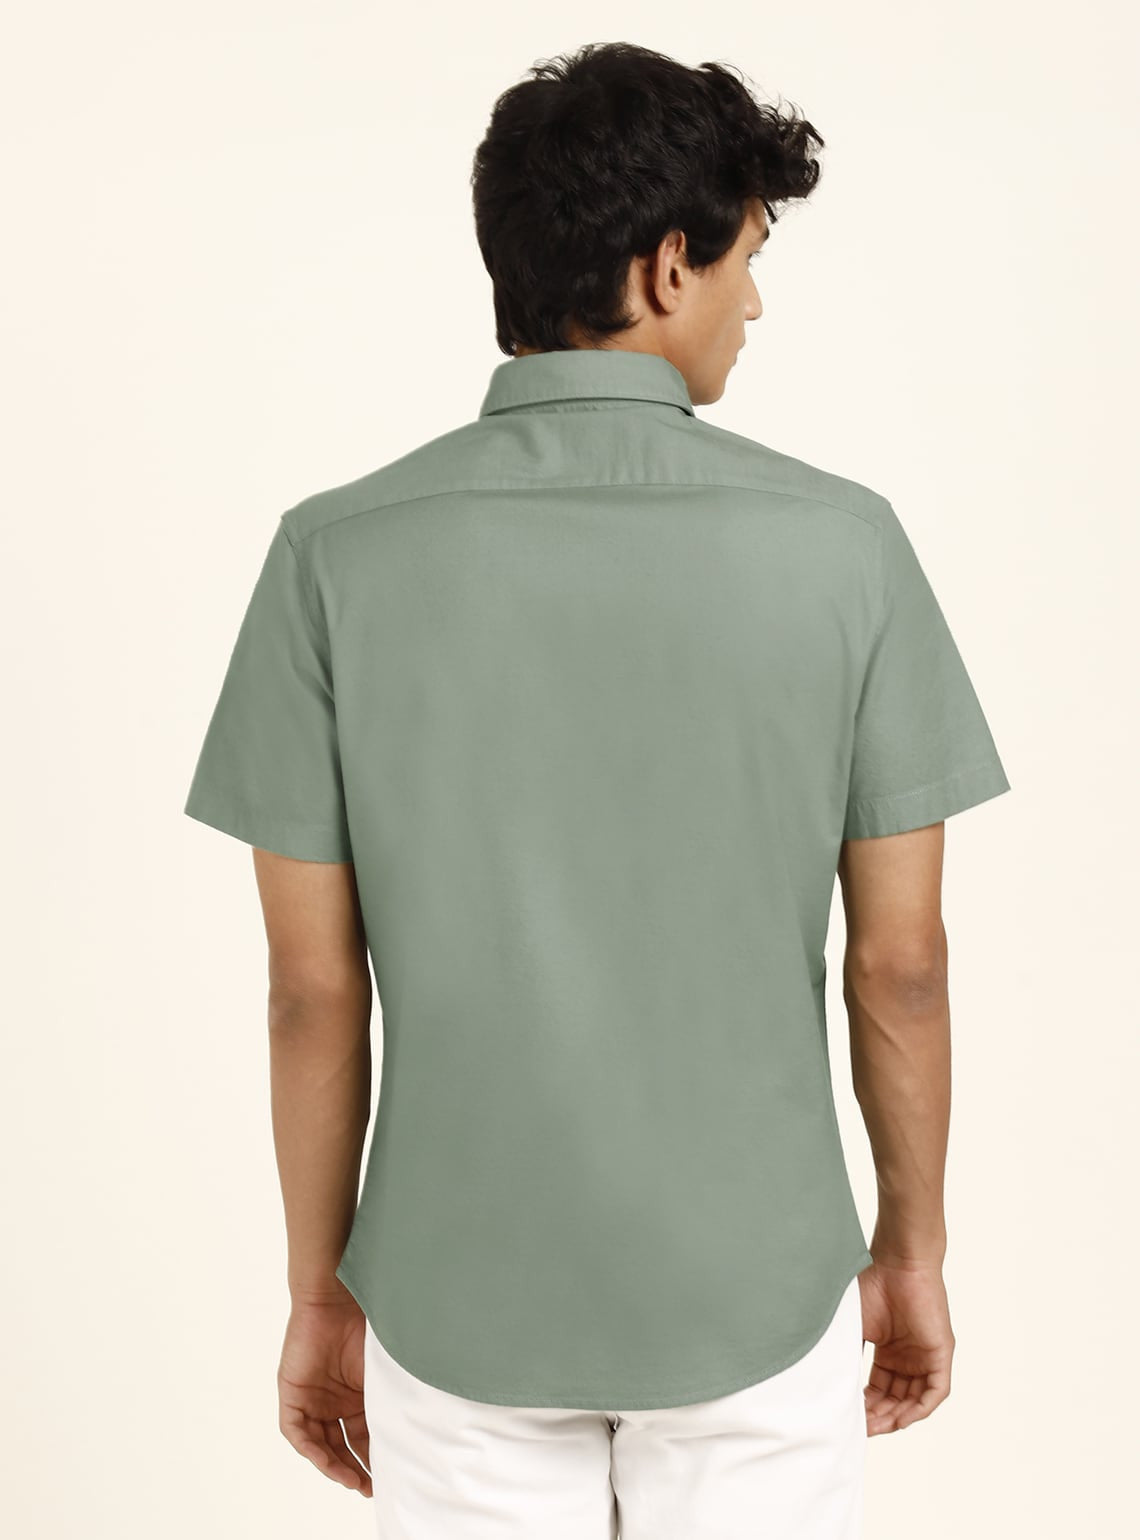 Mineral Green Shirt - Half